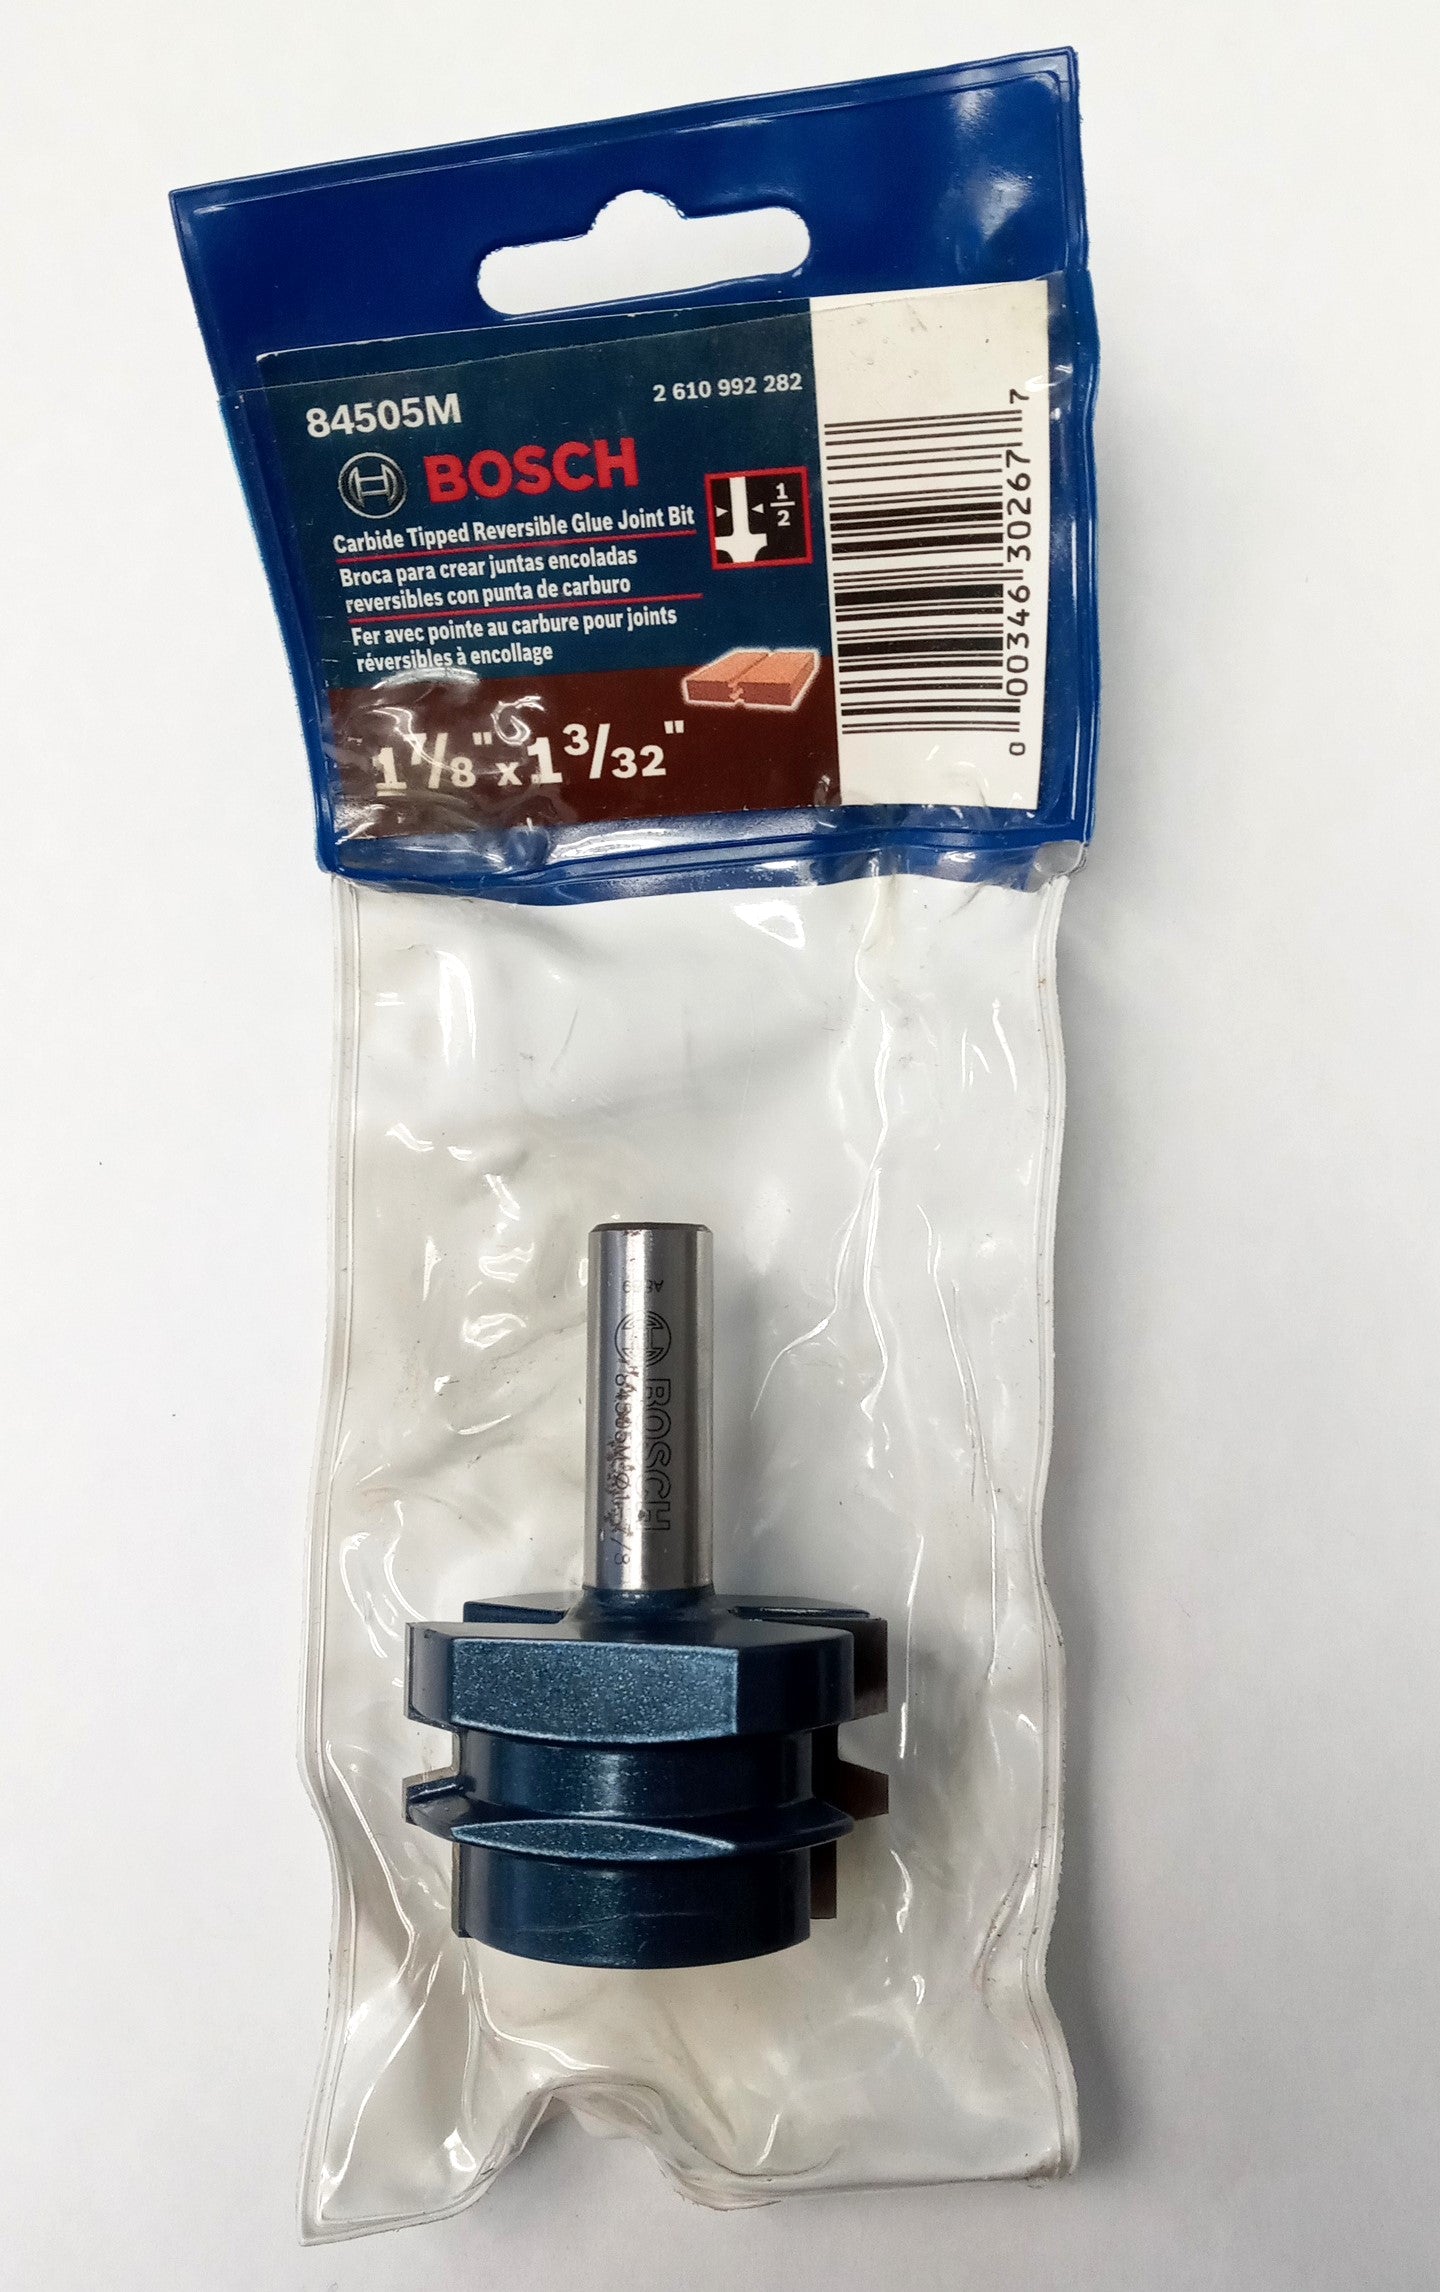 BOSCH 84505M 1-7/8" x 1-3/32" Carbide Tipped Reversible Glue Joint Router Bit